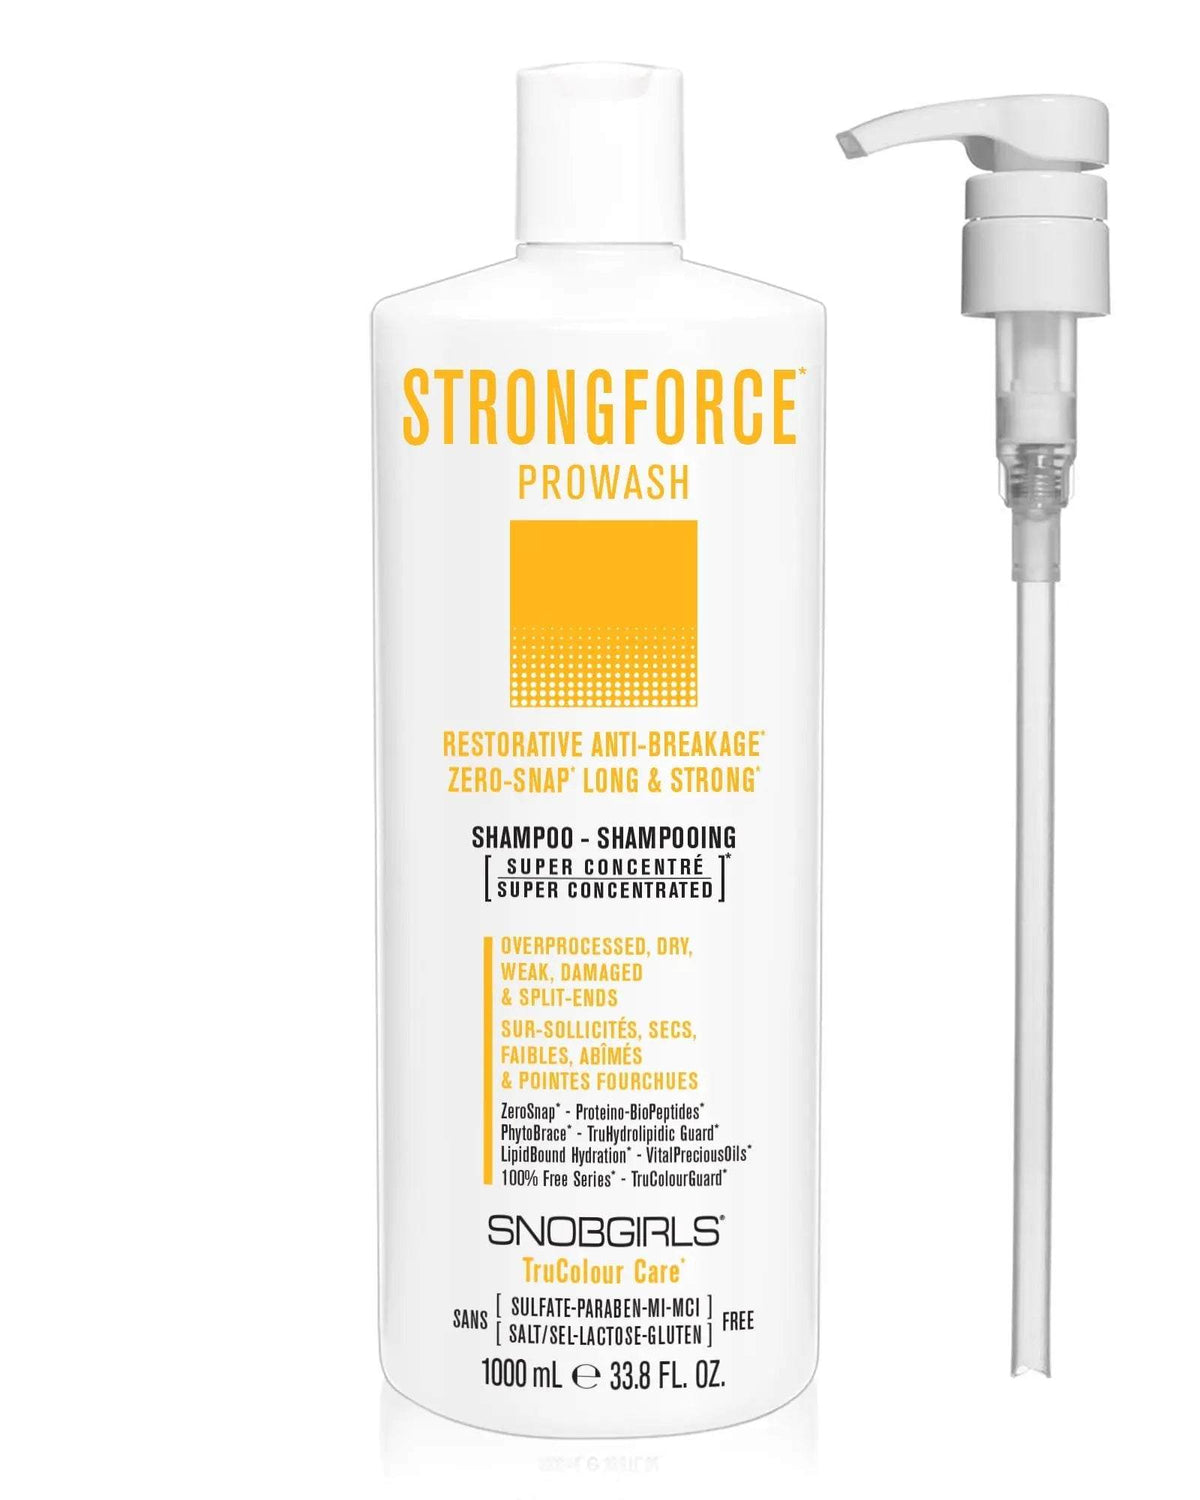 STRONGFORCE Prowash (shampoo) 1000 mL + Pump - SNOBGIRLS Canada